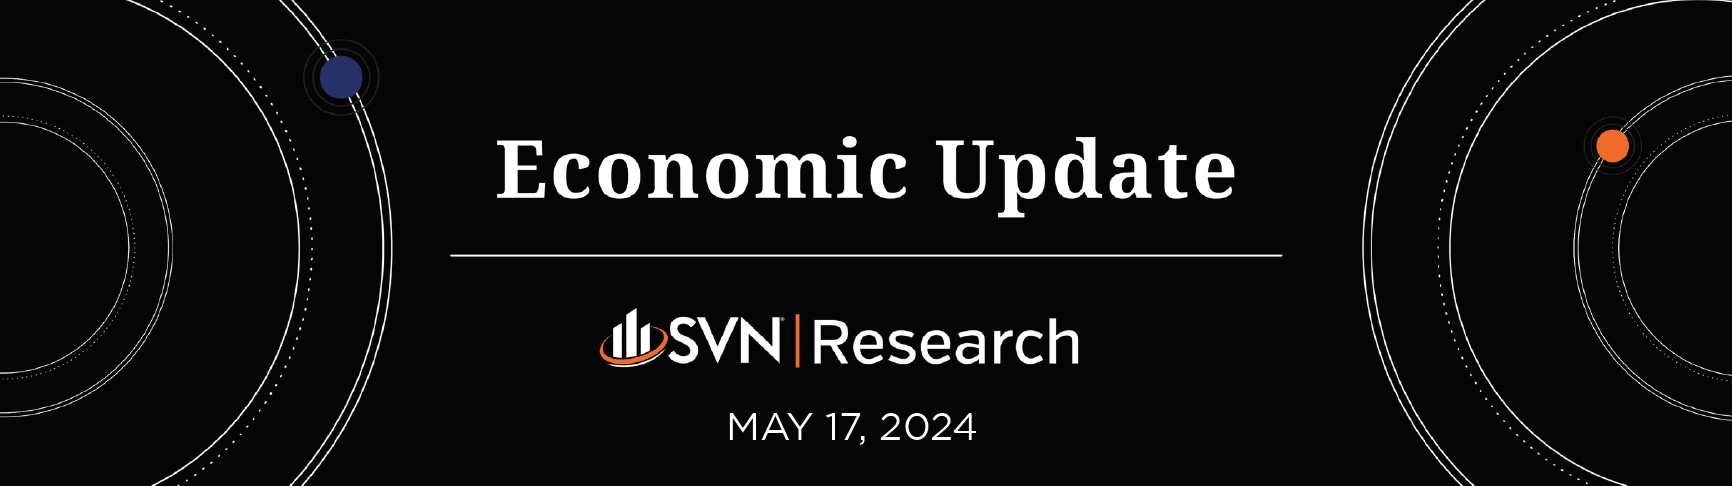 SVN | Research Economic Update 5.17.2024